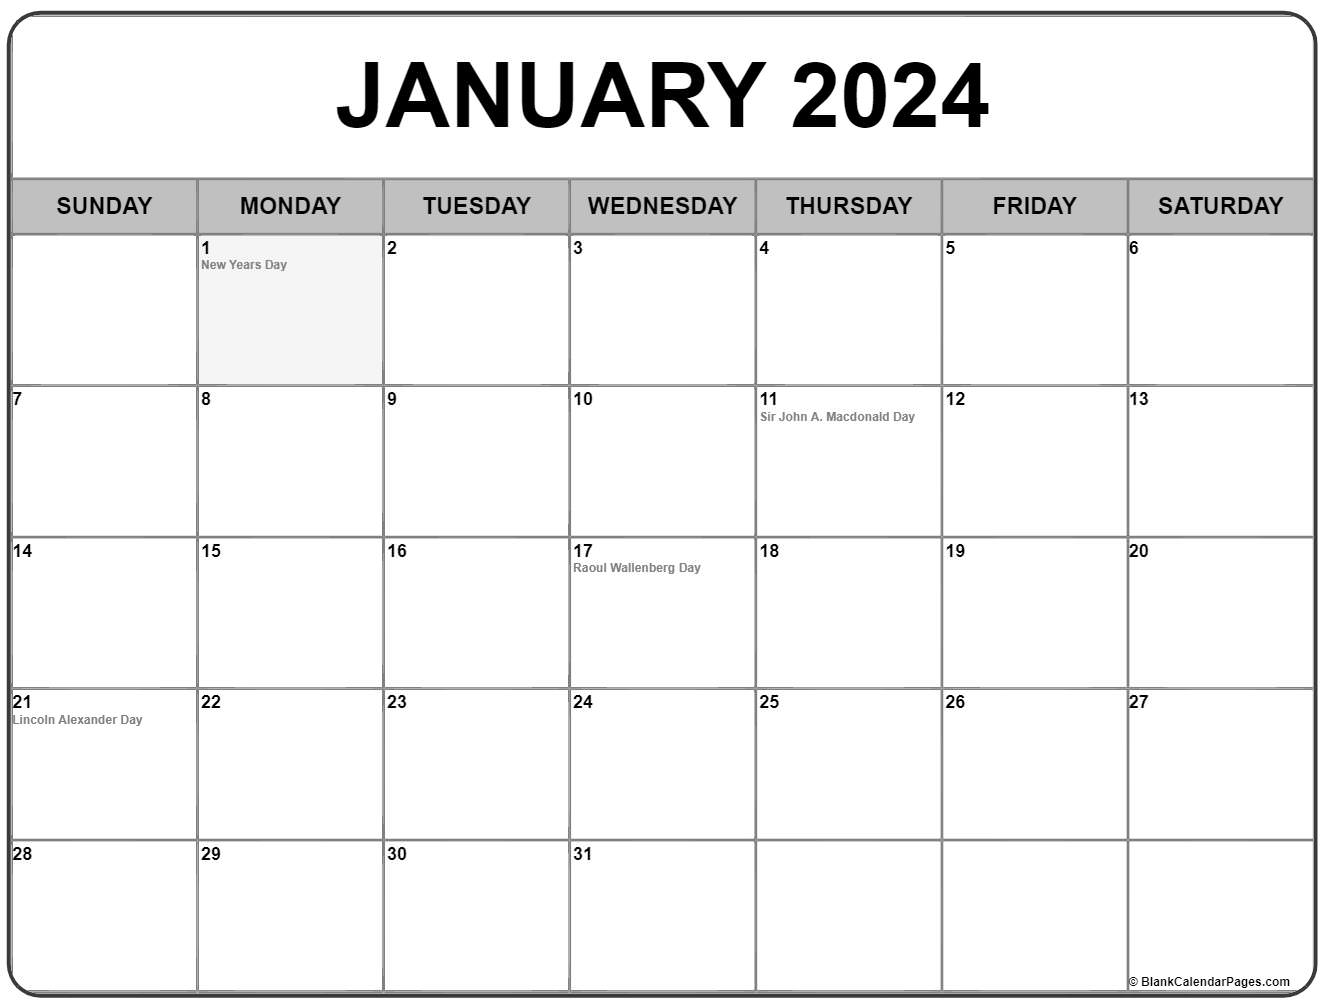 January 2021 calendar with holidays